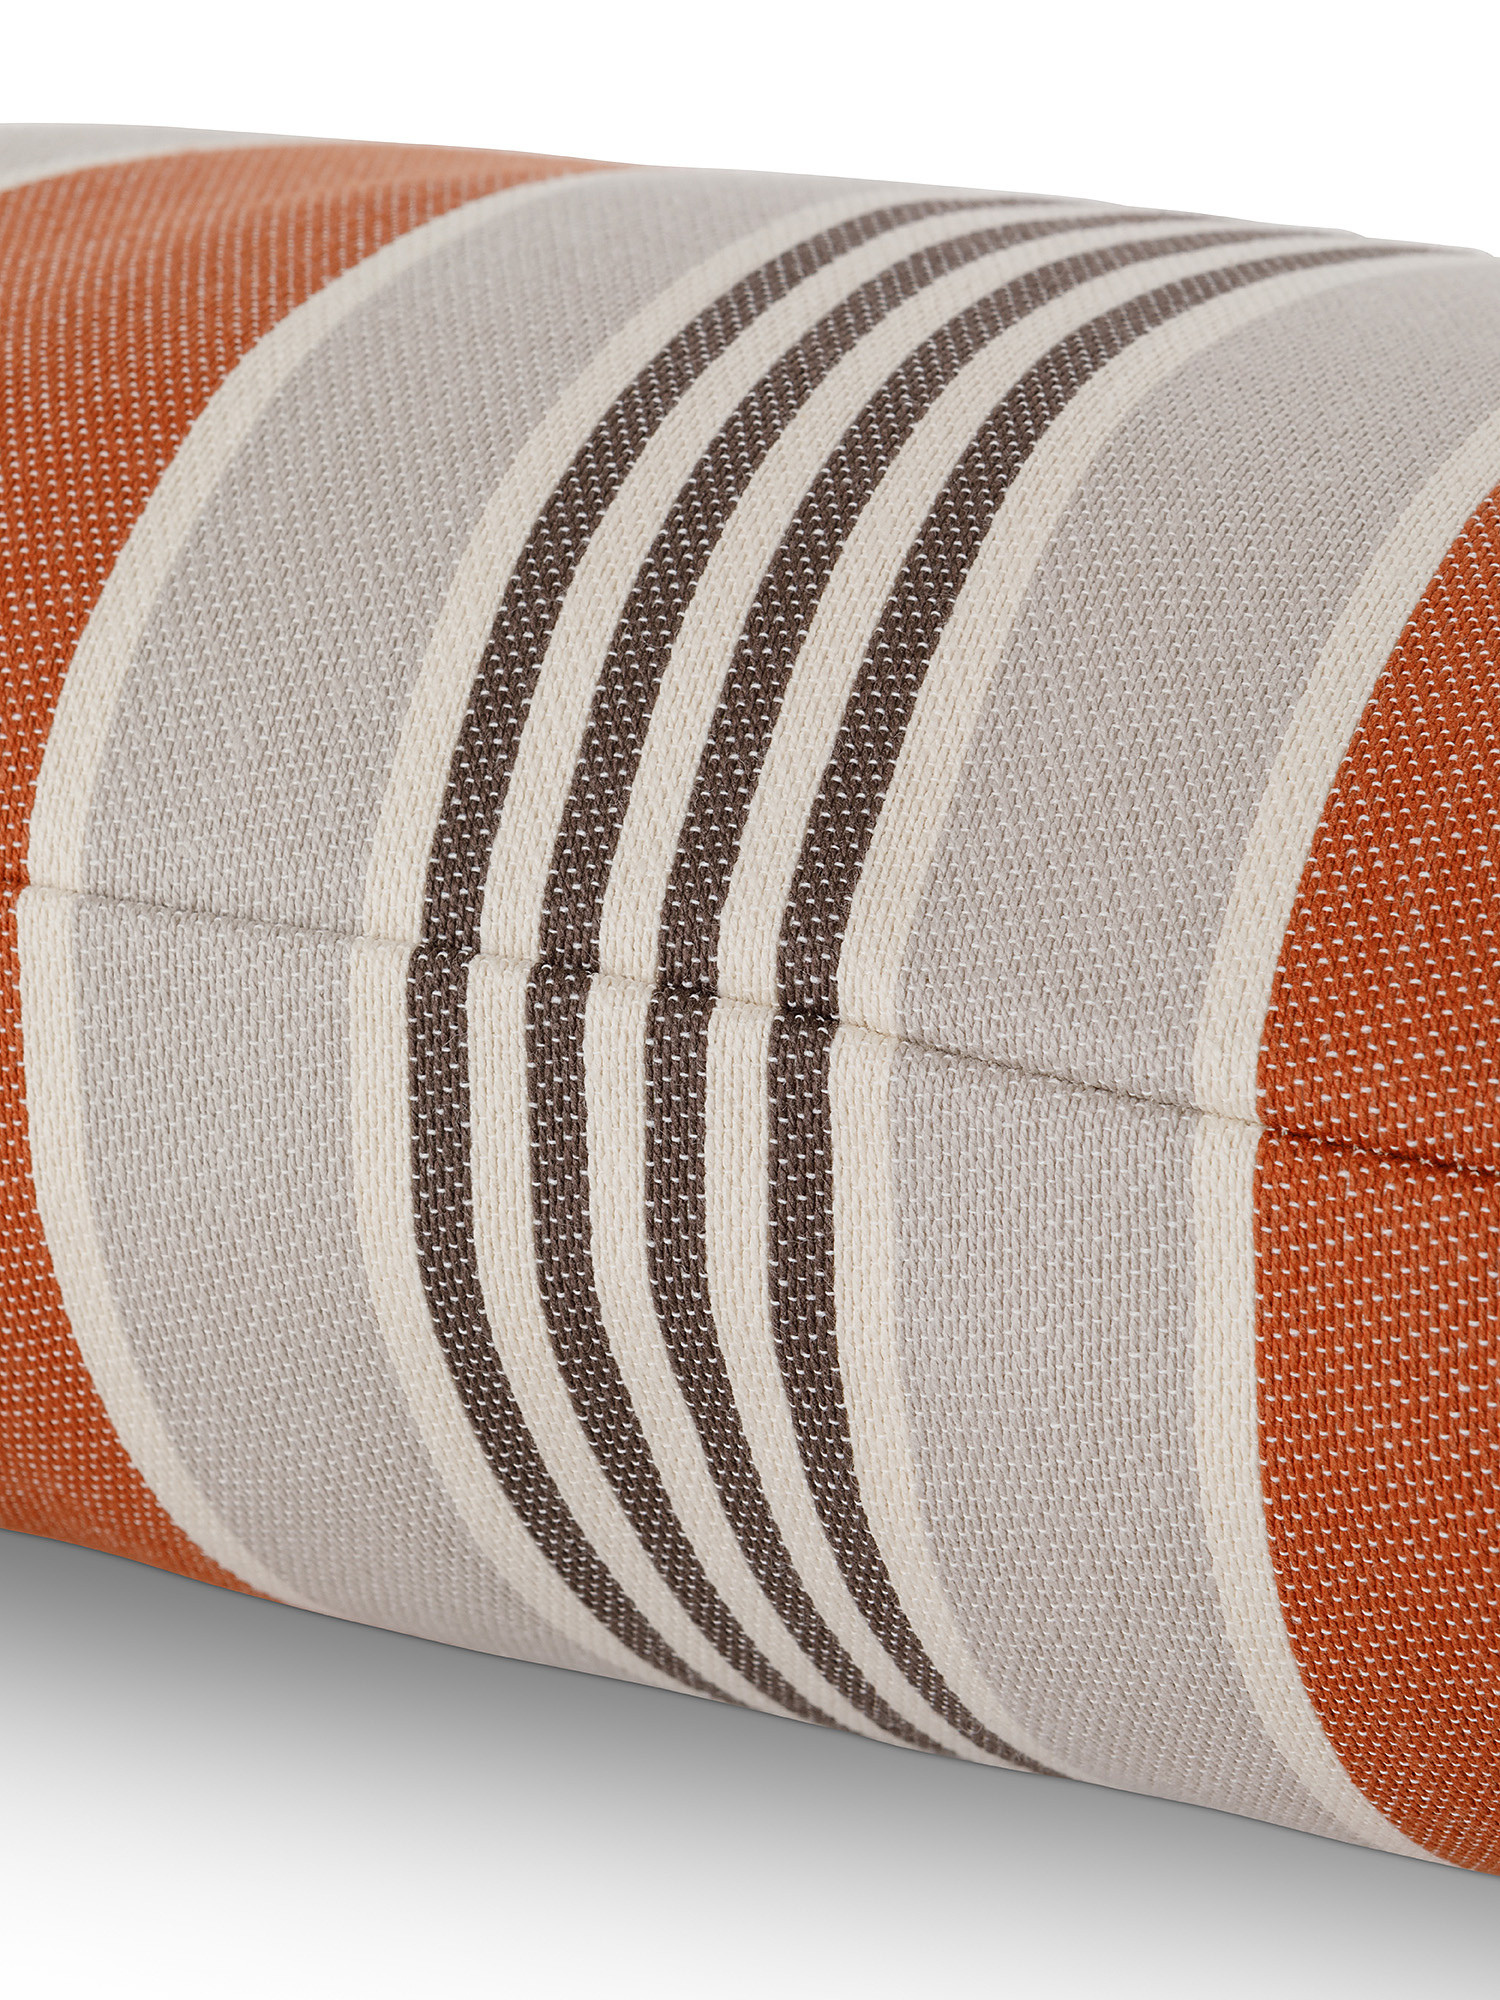 Striped jacquard cushion 35x55cm, Brown, large image number 1